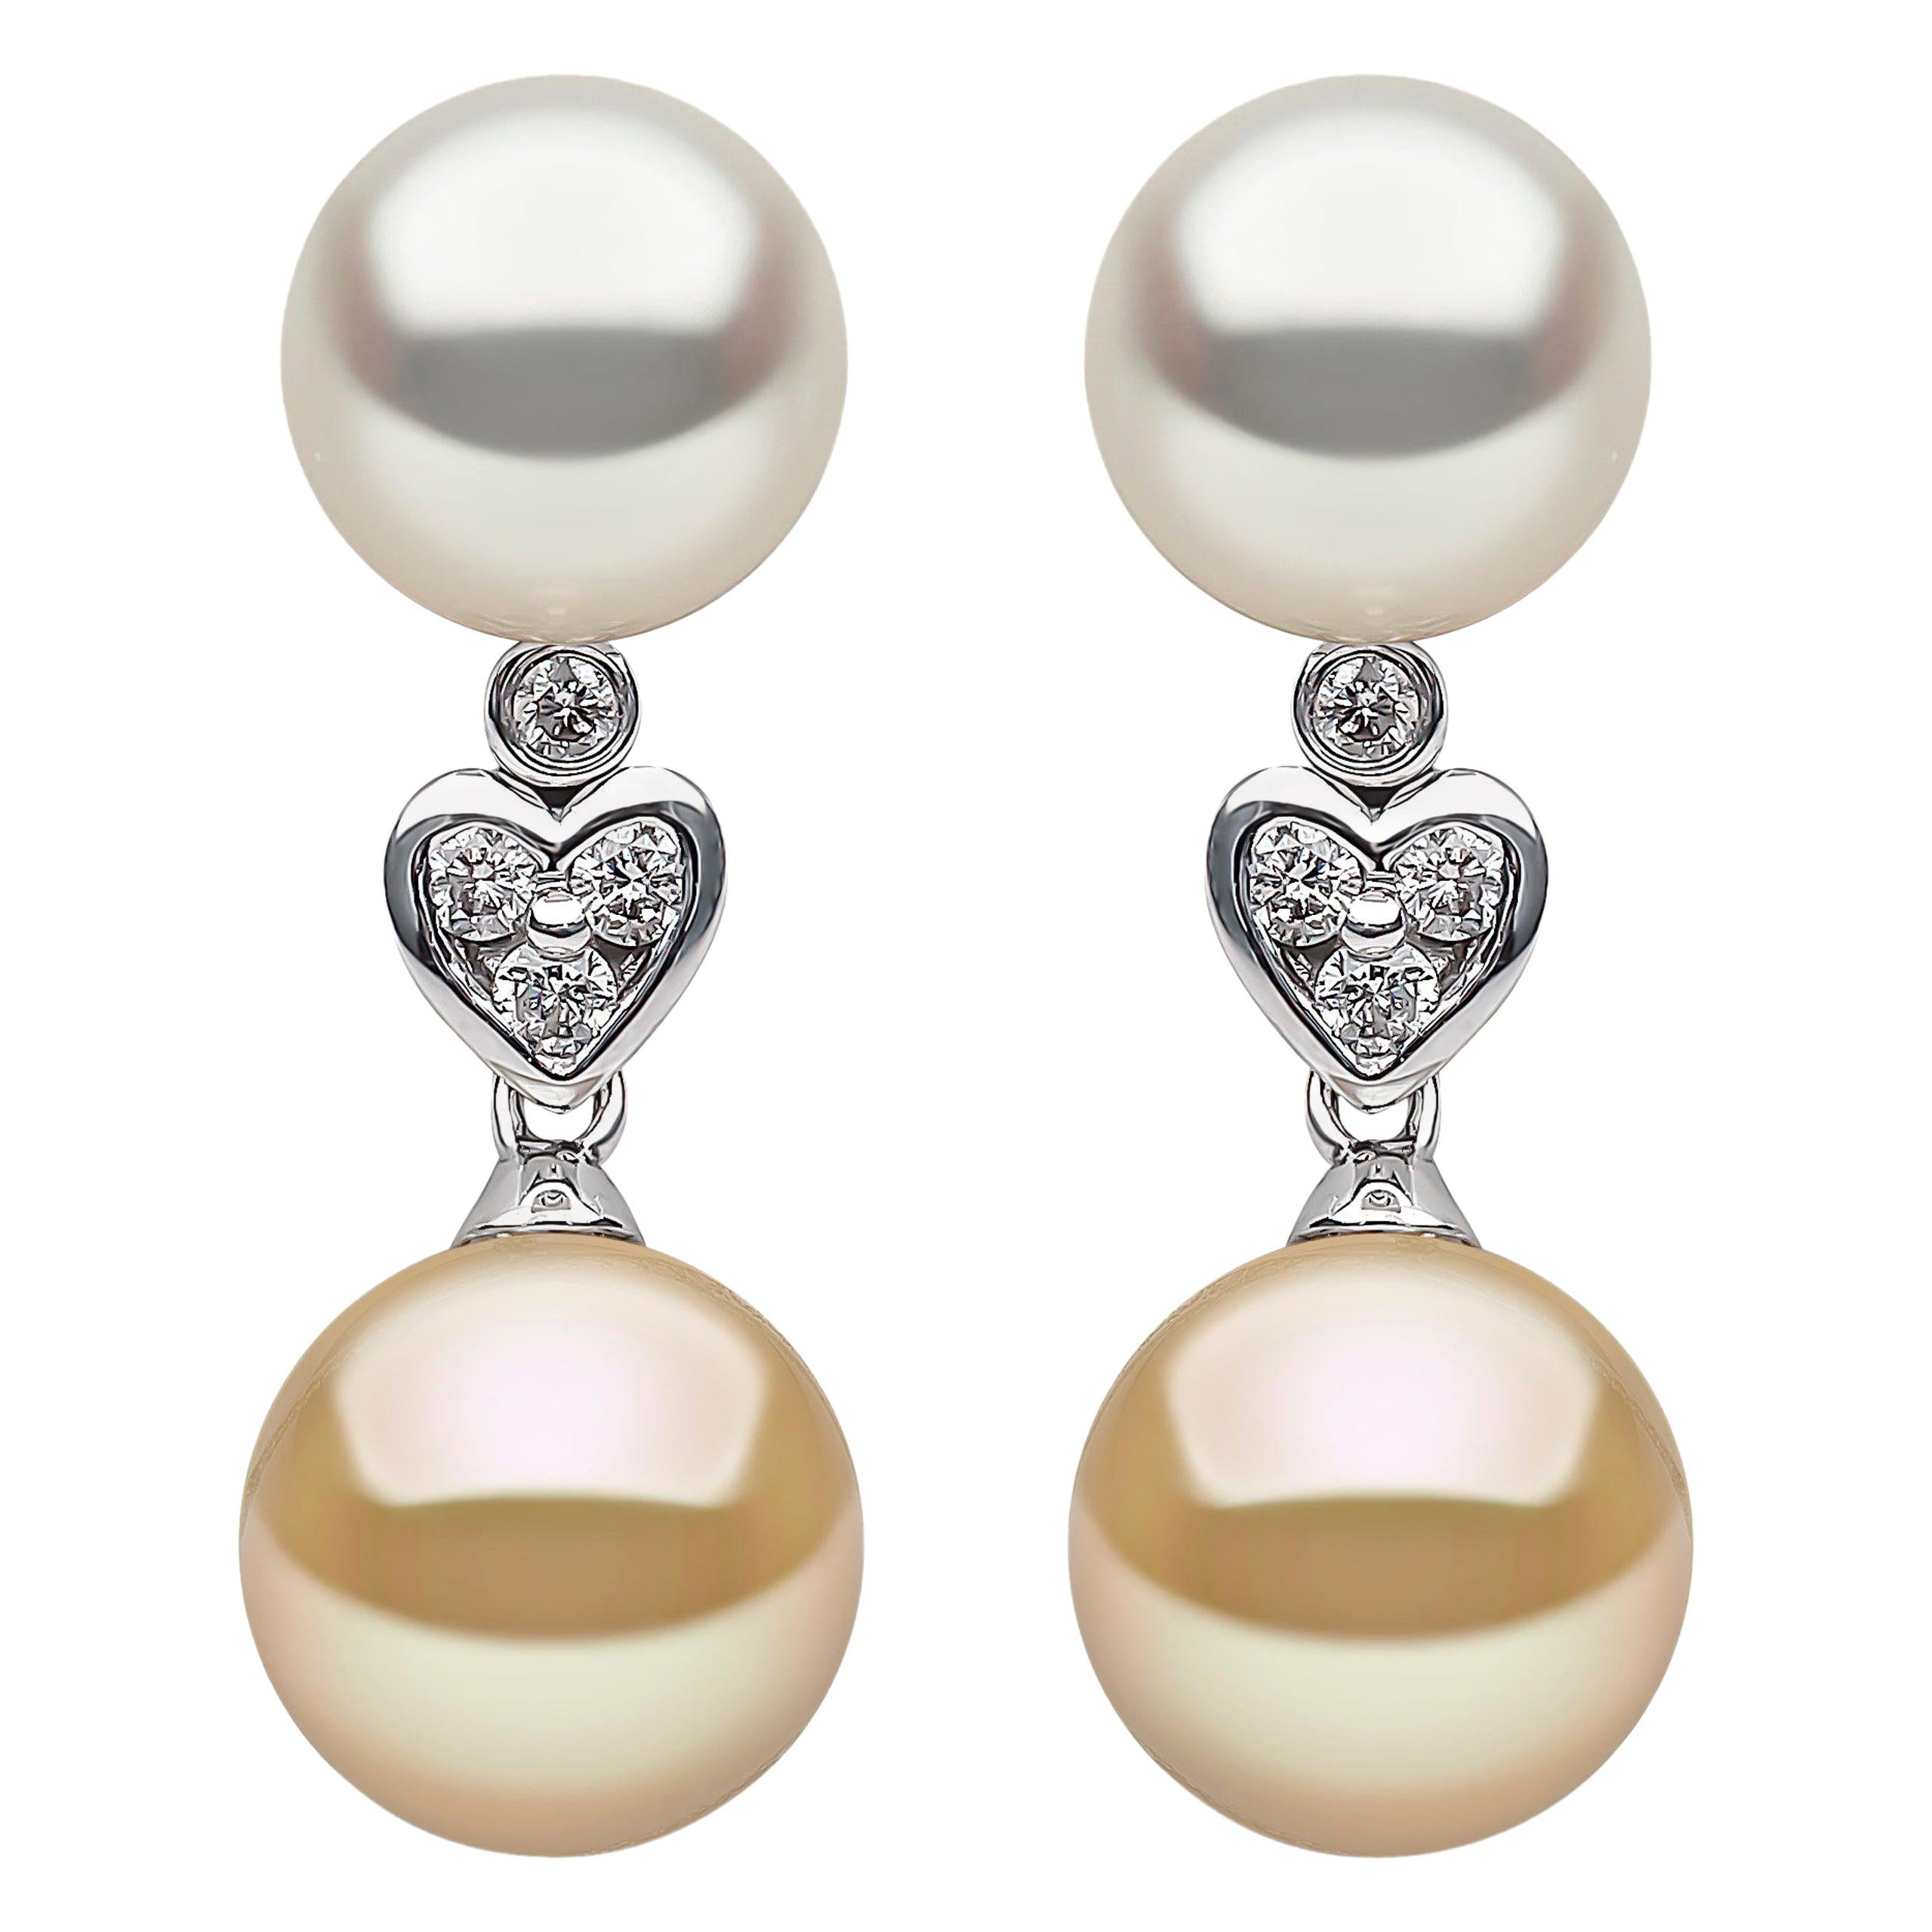 Yoko London White & Golden South Sea Pearl & Diamond Earrings in 18k White Gold